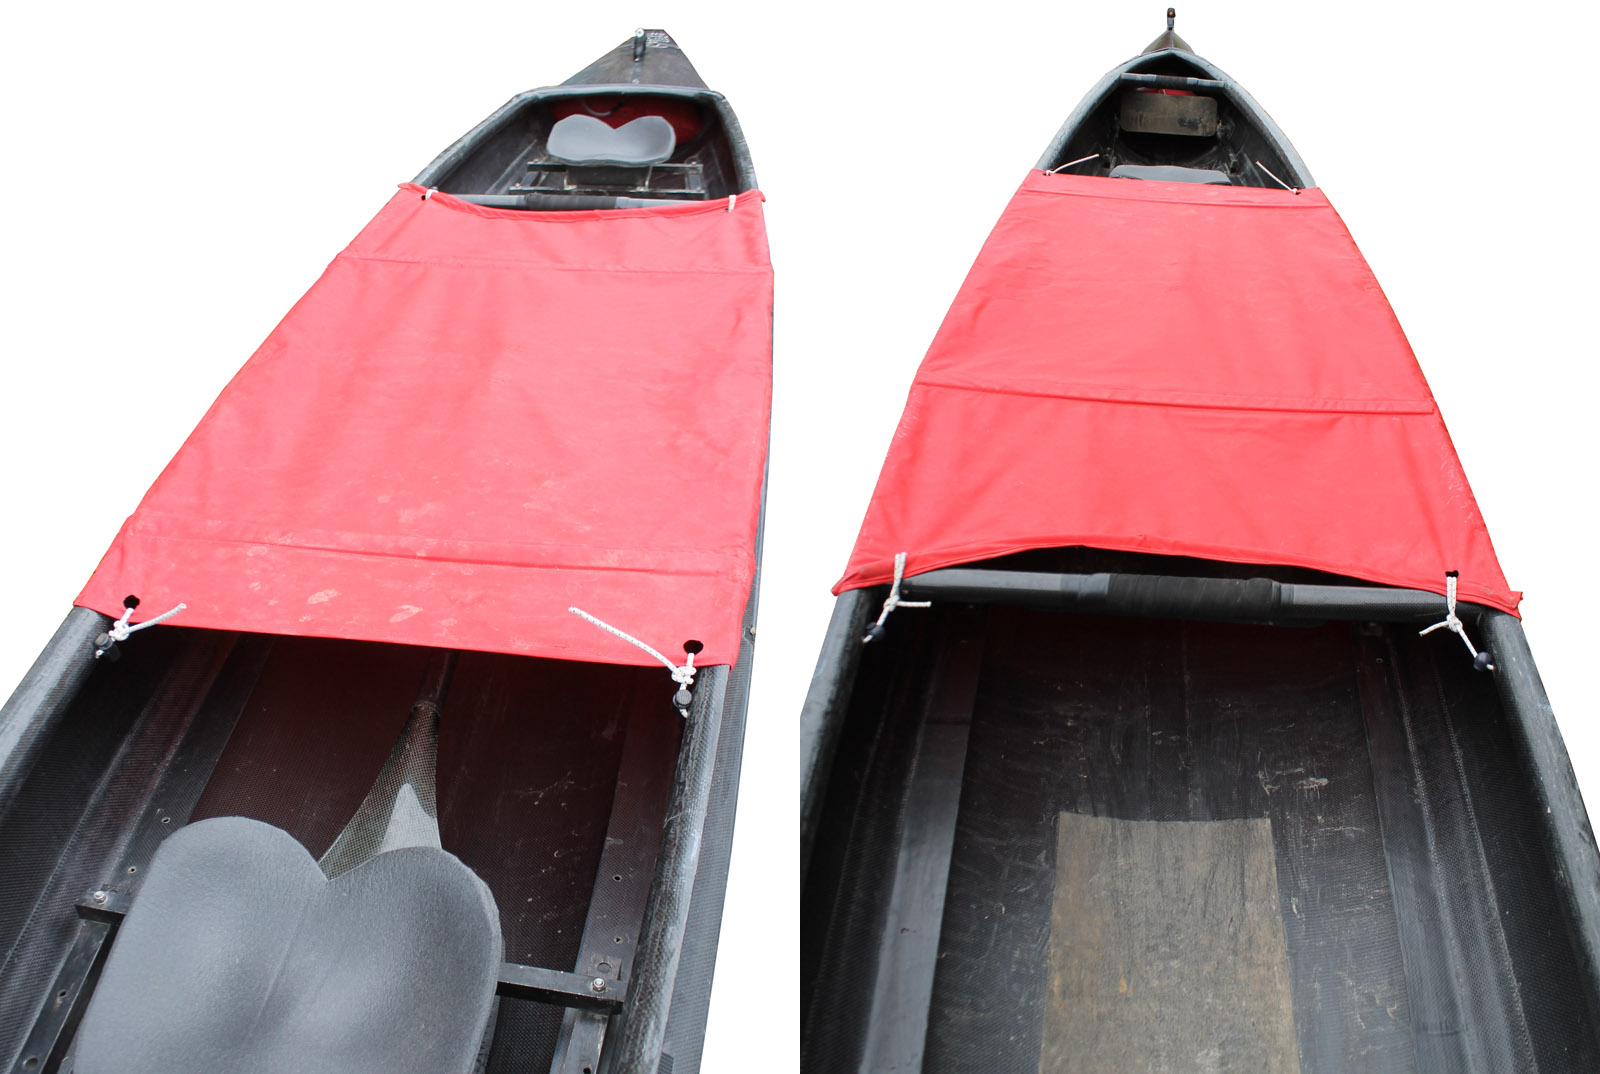 darkside canoes marathon racing canoes, developed